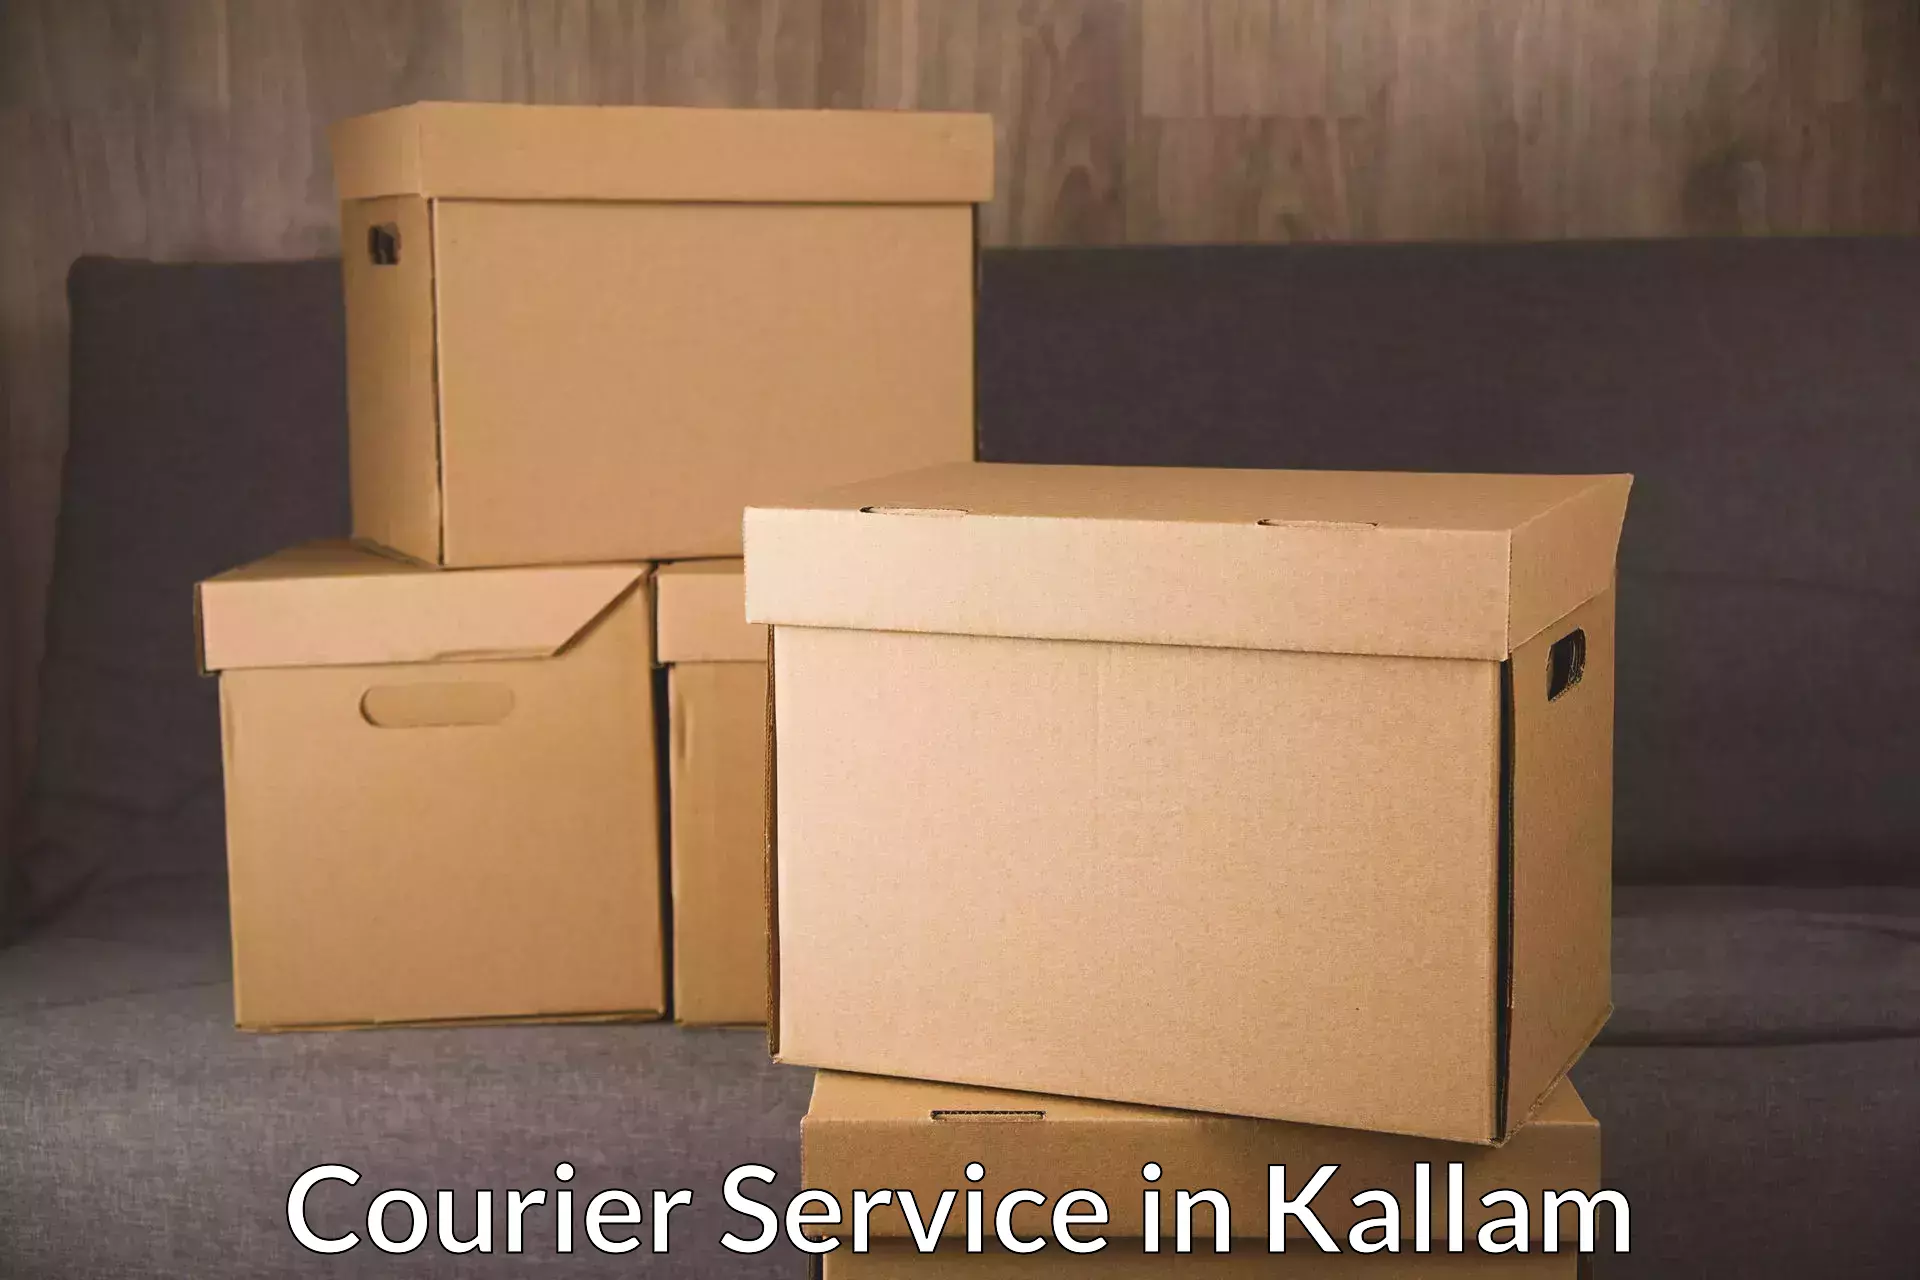 Efficient cargo handling in Kallam